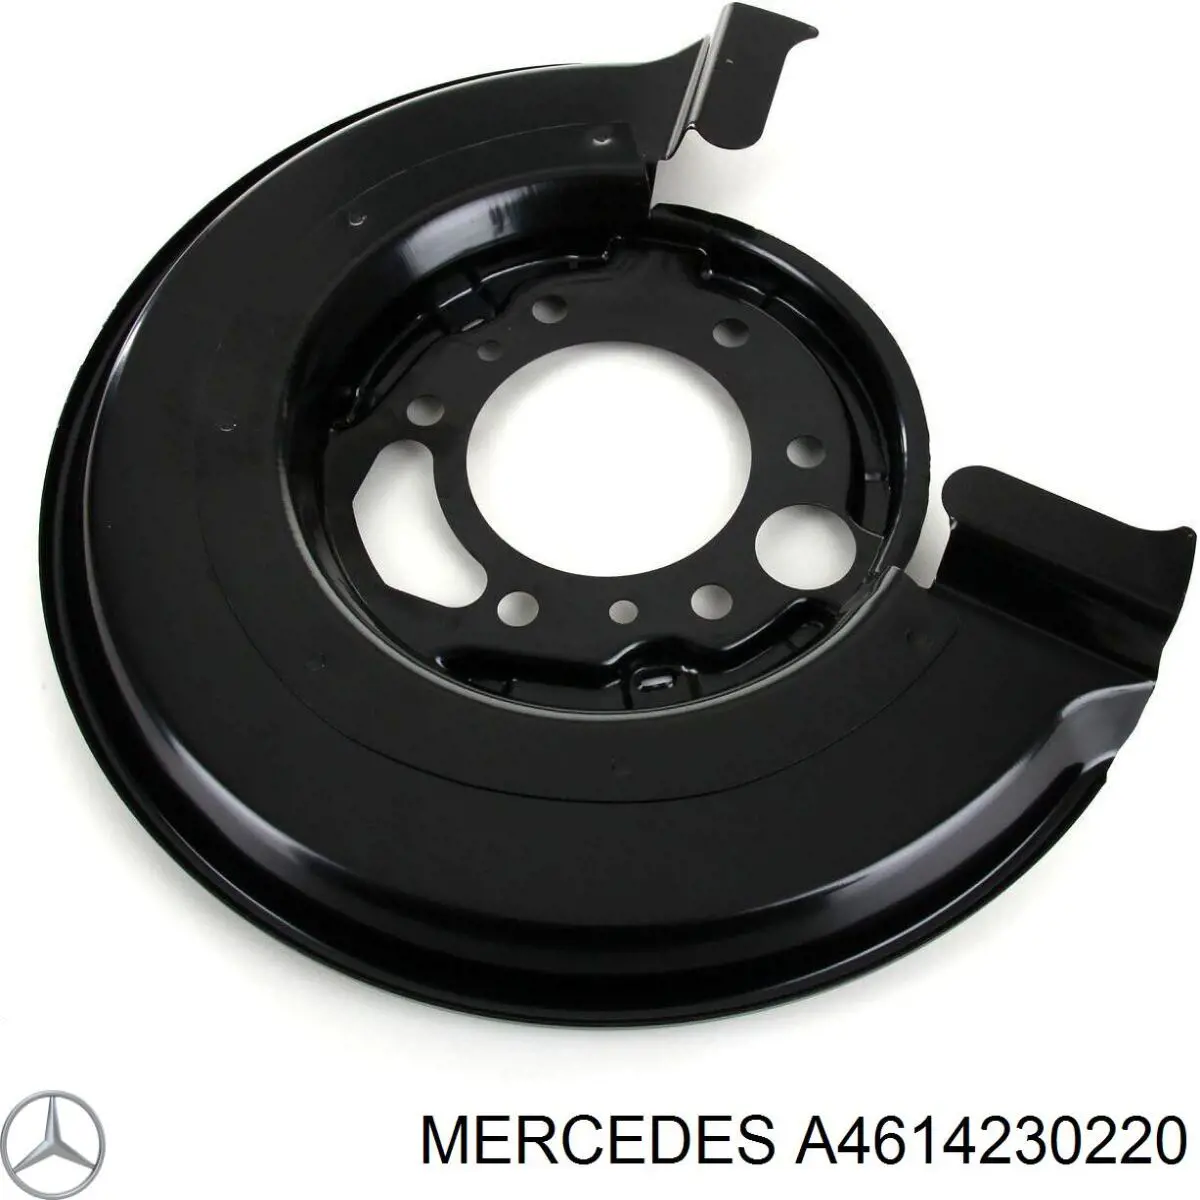 A4614230220 Mercedes chapa protectora contra salpicaduras, disco de freno trasero derecho